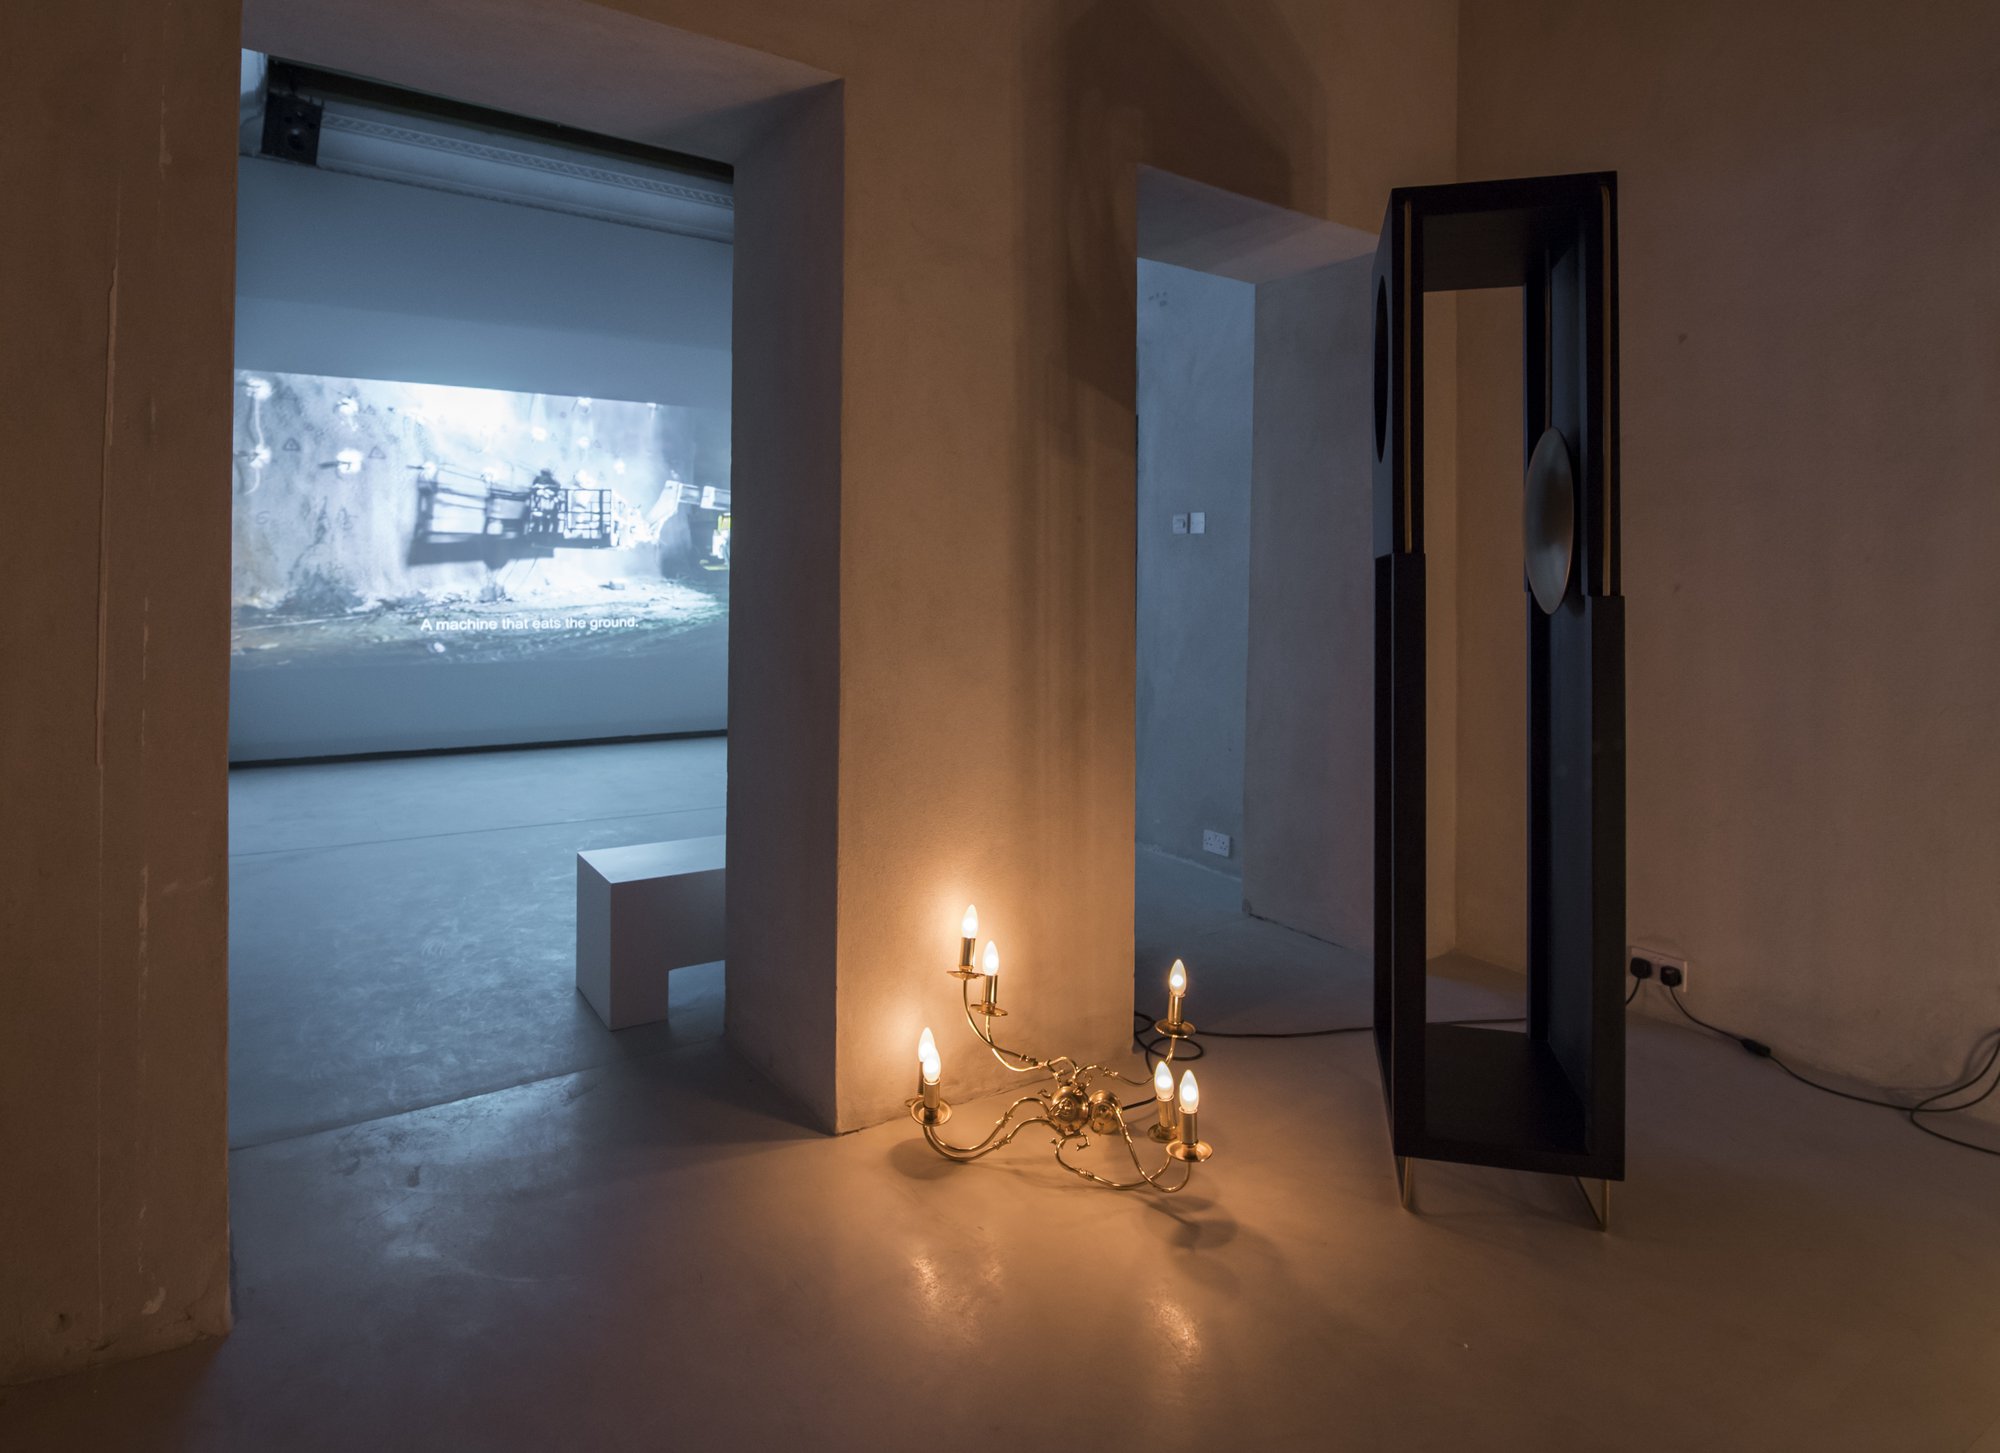 Shadi Habib Allah, Installation view, Sharjah Biennial 13, Sharjah, 2017